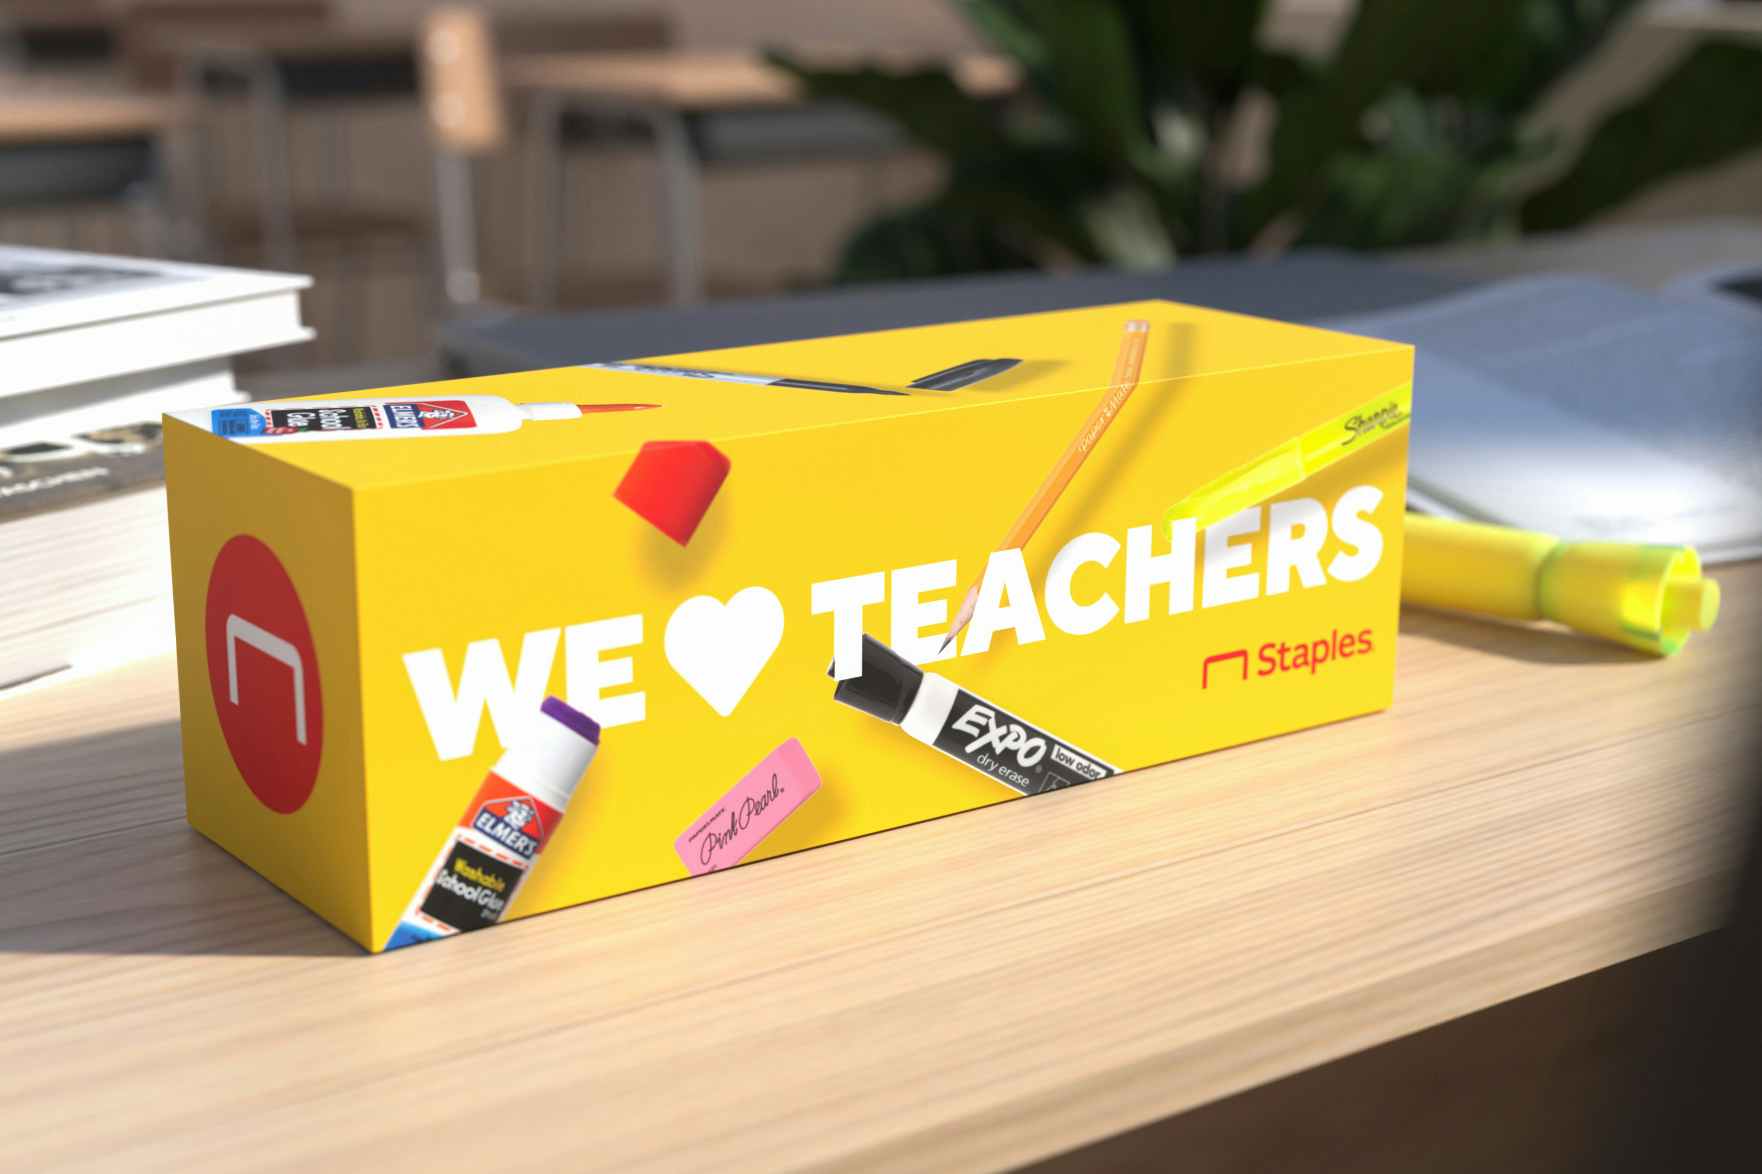 we-love-teachers-staples-free-teacher-supply-kit-school-supplies-box-official-media.jpg